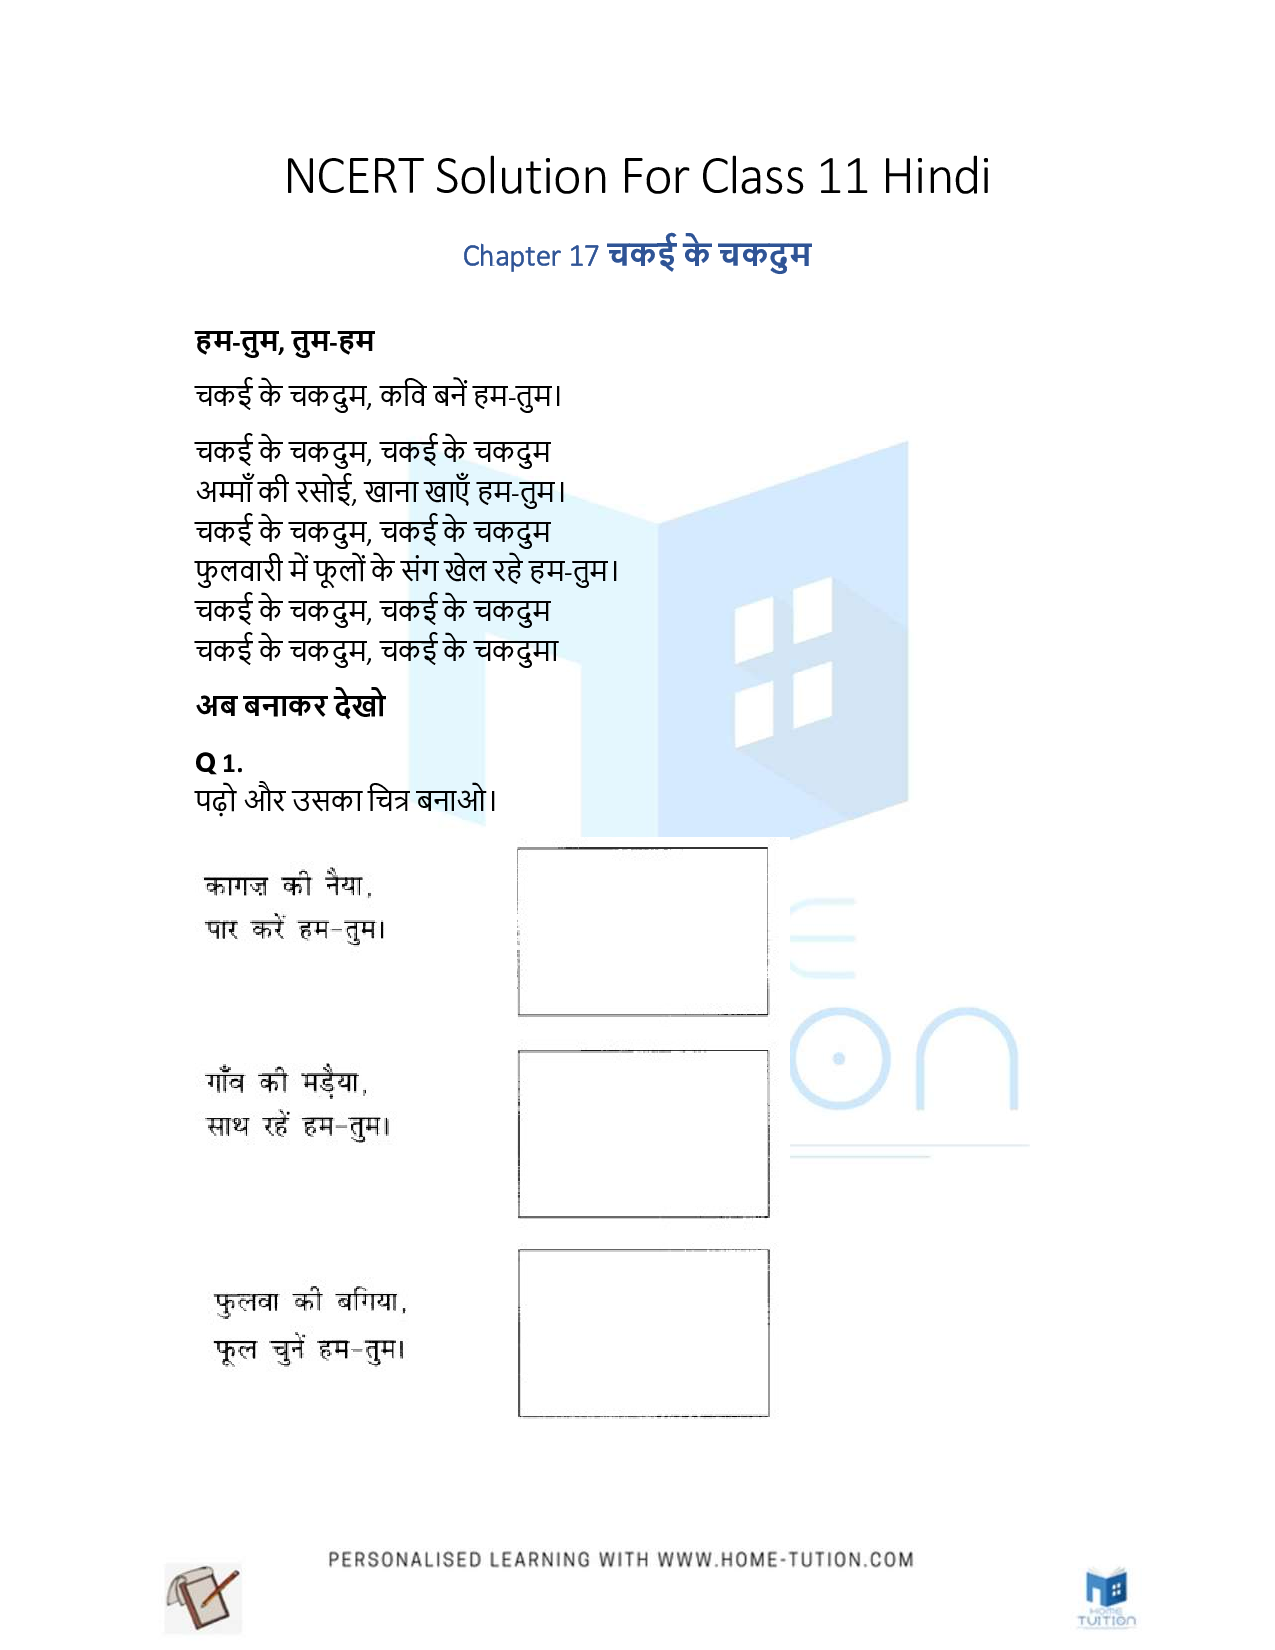 NCERT Solution for Class 1 Hindi Chapter 17 Chakai Ke Chakdoom (चकई-के-चकदुम)